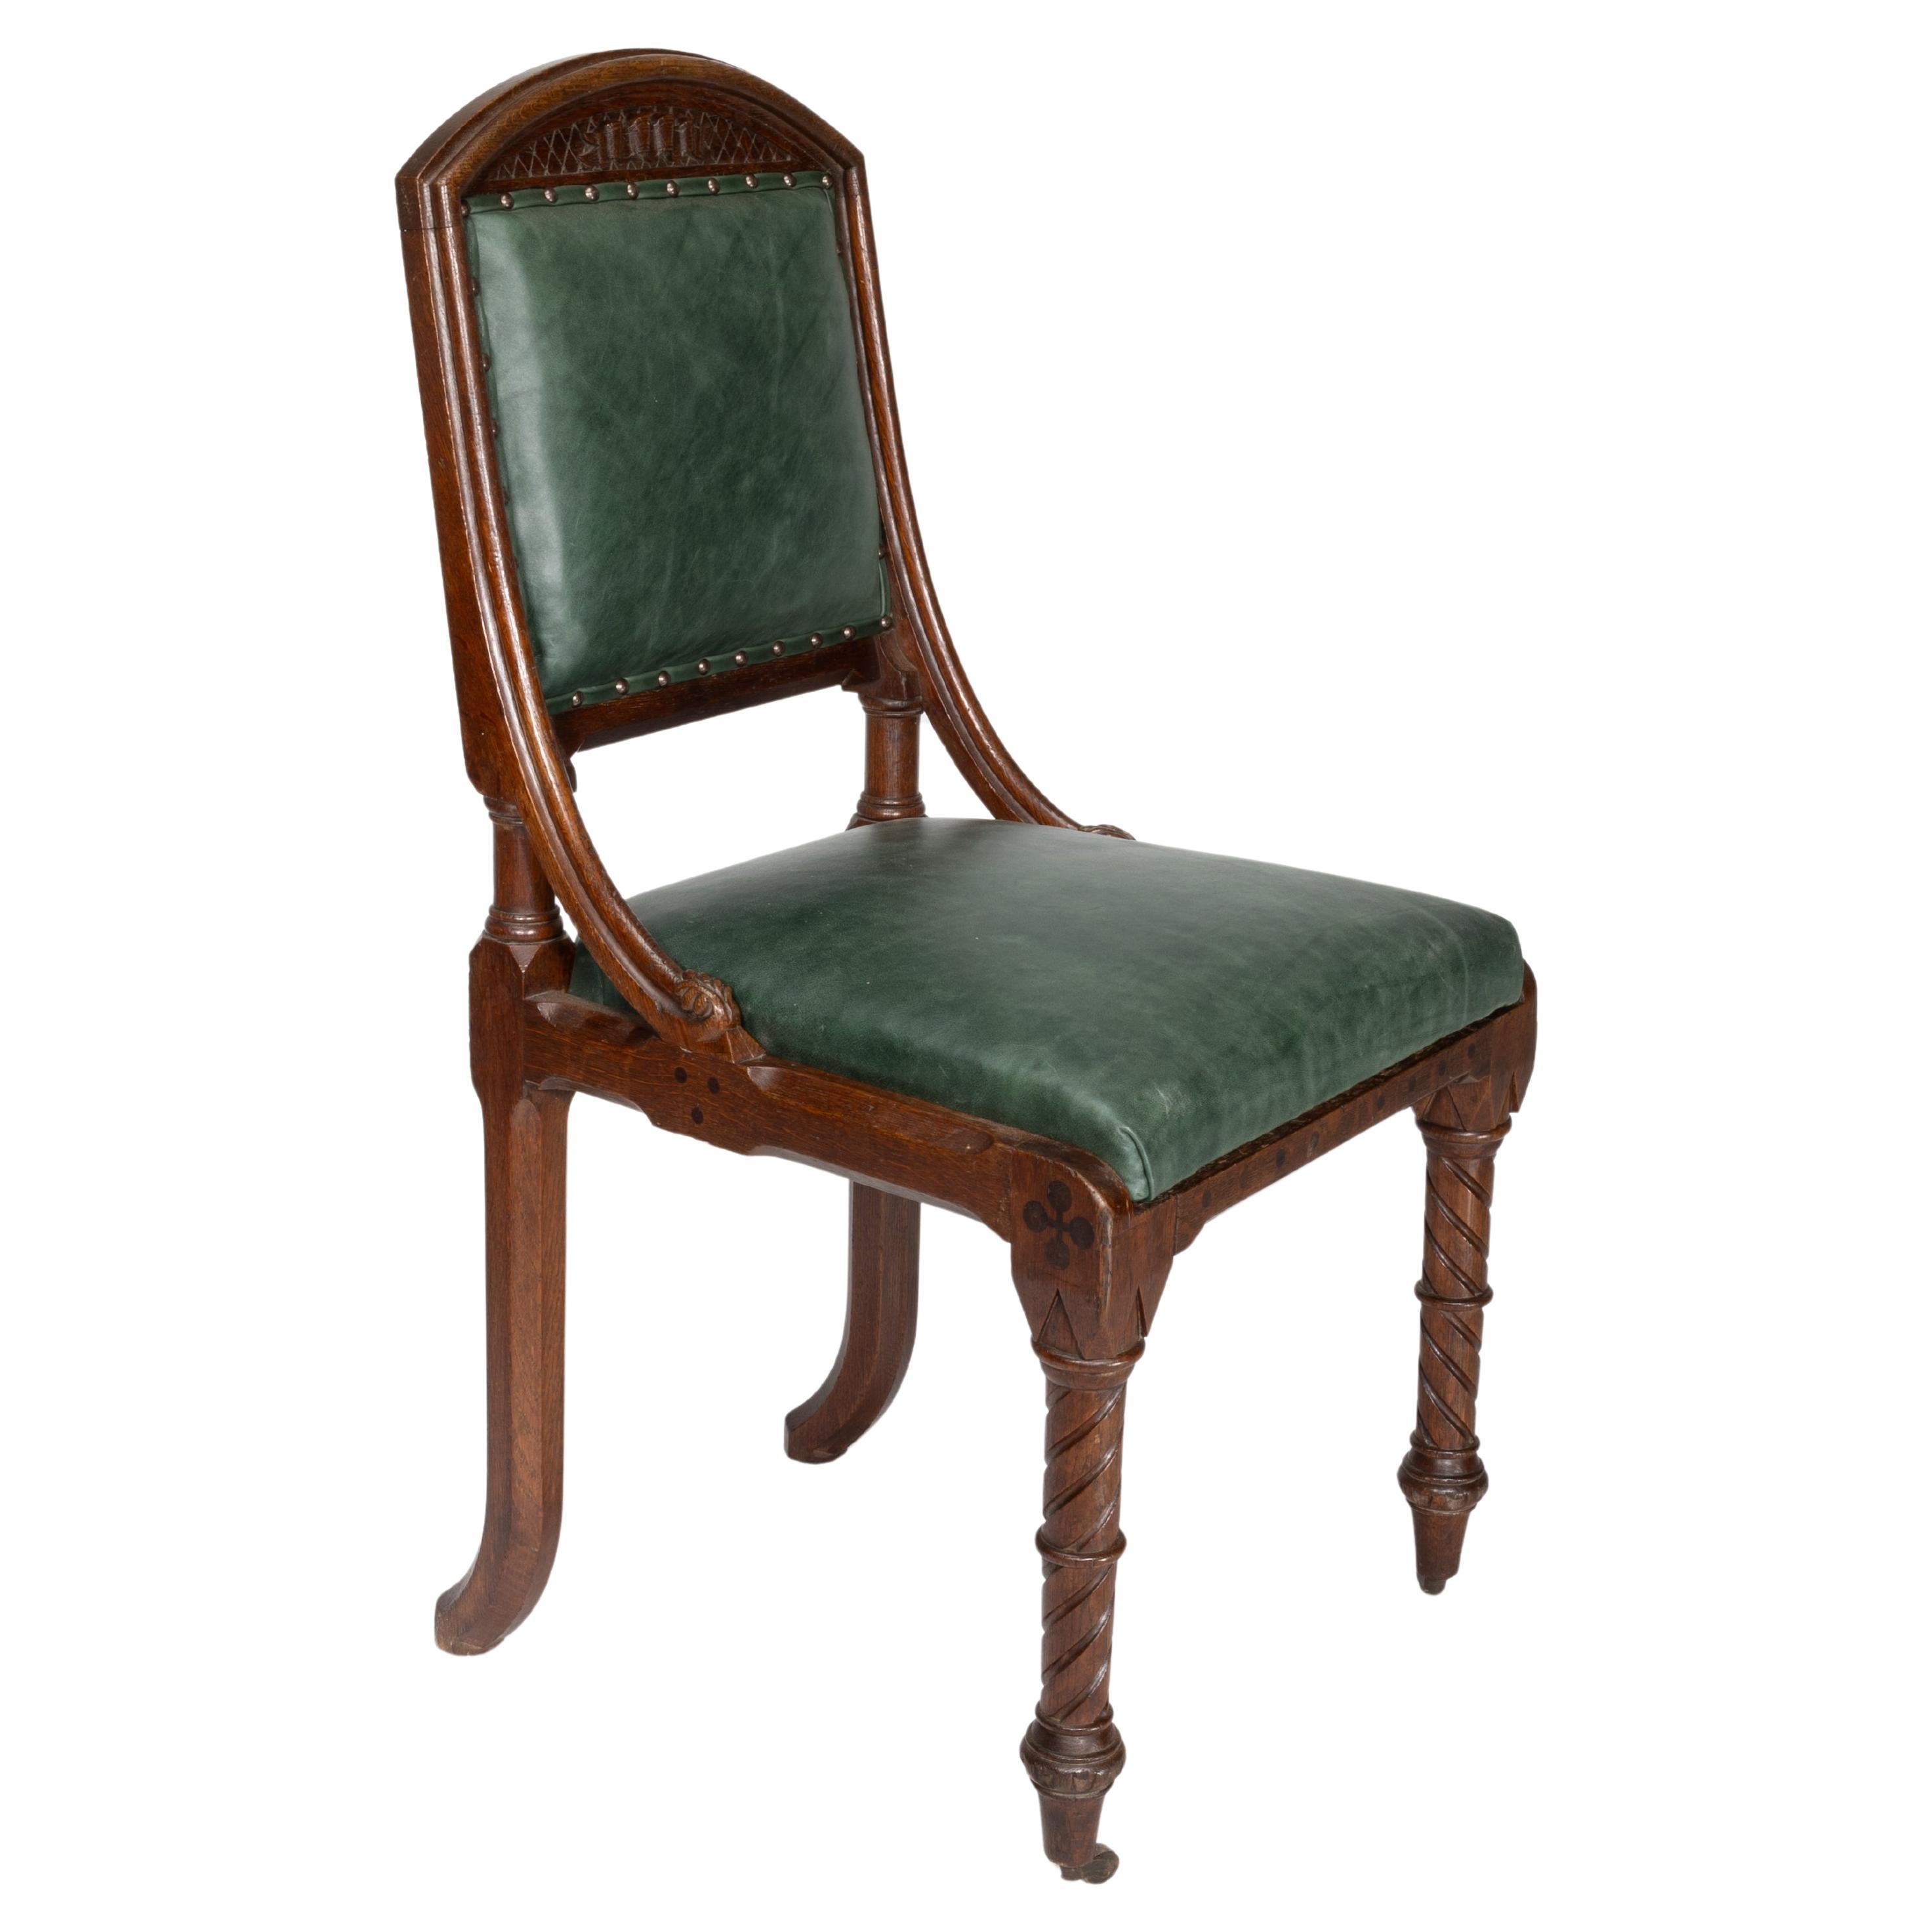 John Pollard Seddon (attributed). A Gothic Revival Oak Side or Desk Chair For Sale